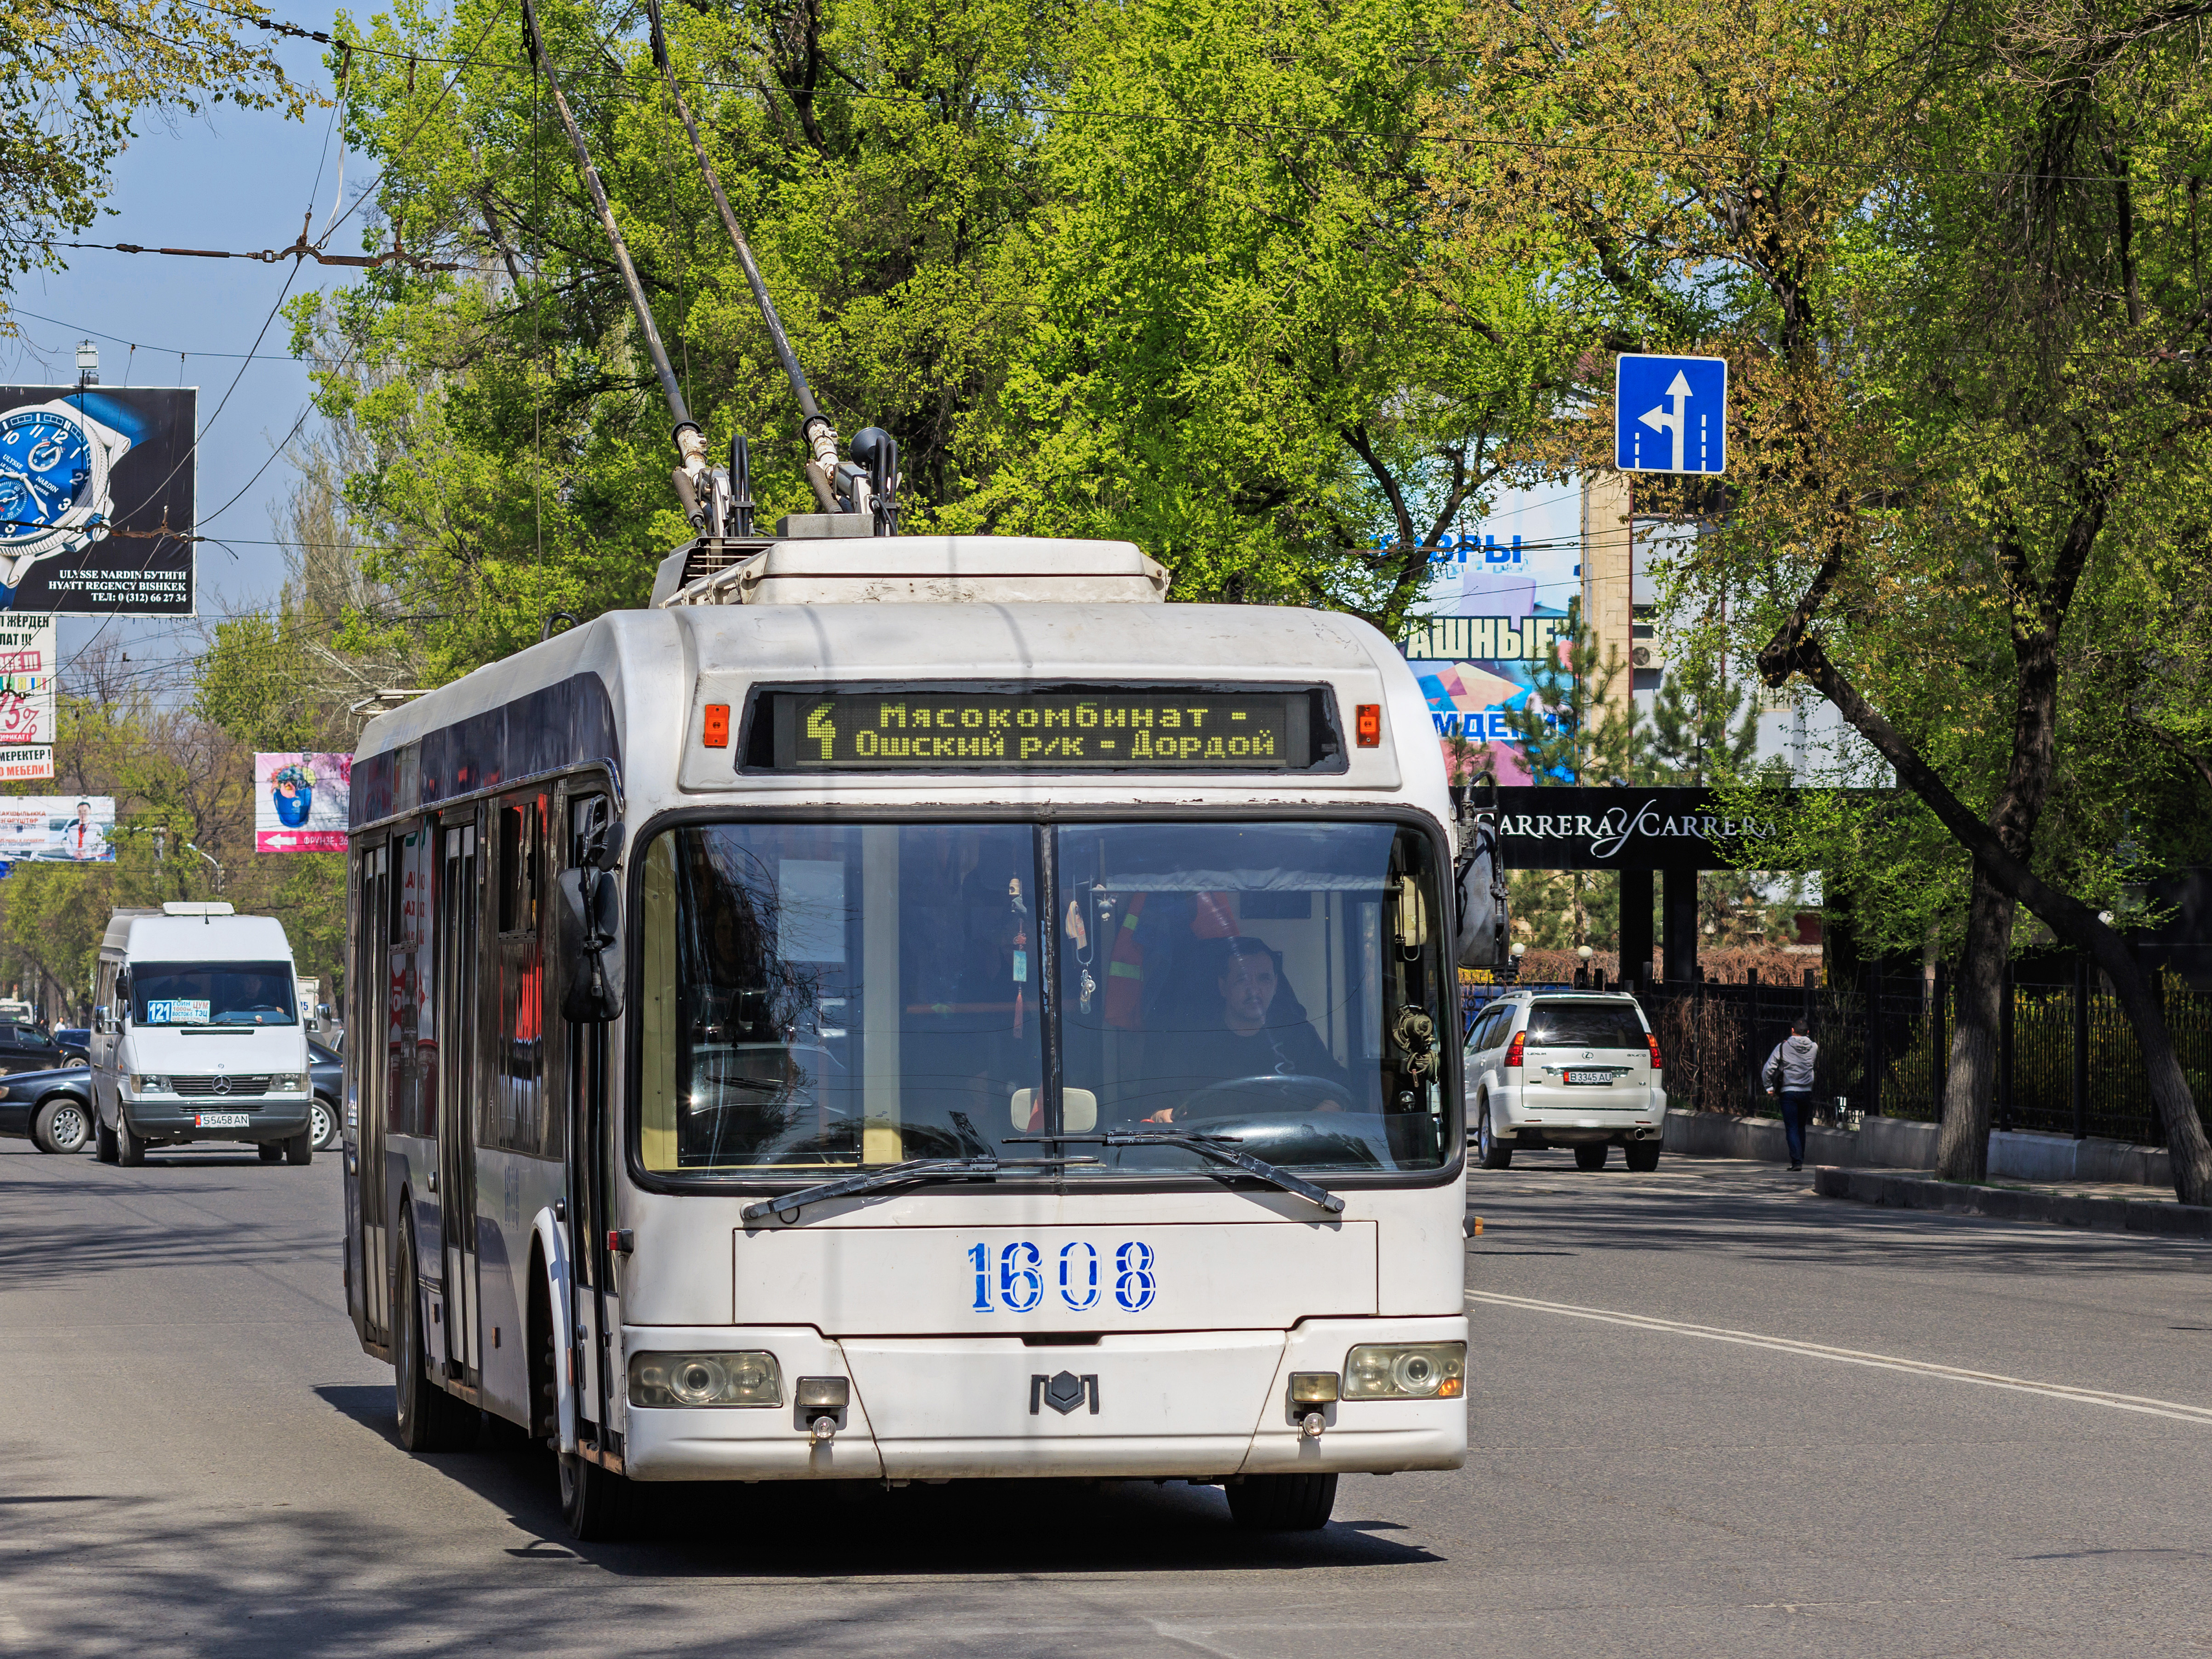 Bishkek 03-2016 img05 trolley at Abdrahmanova Street